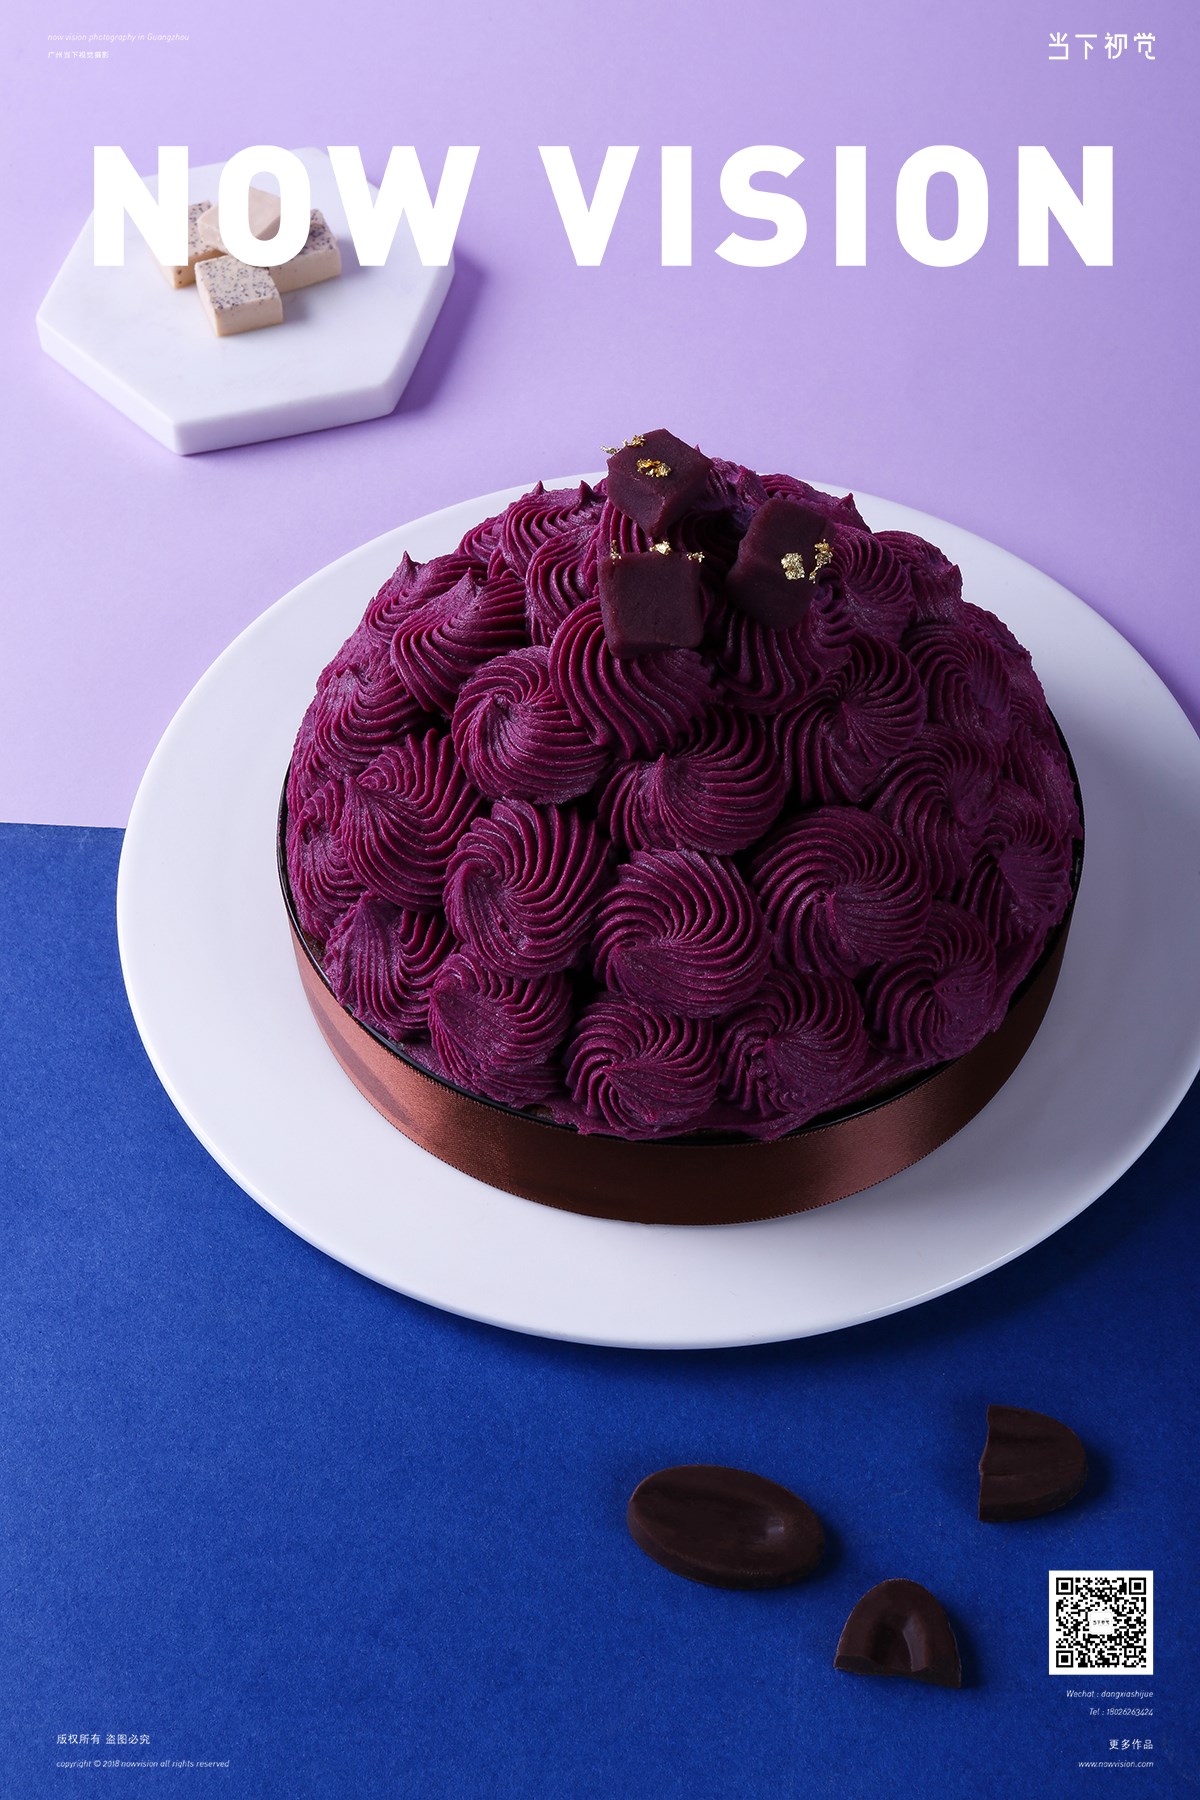 CAKE蛋糕摄影 I 紫来轩 I 当下视觉摄影NOWVISION